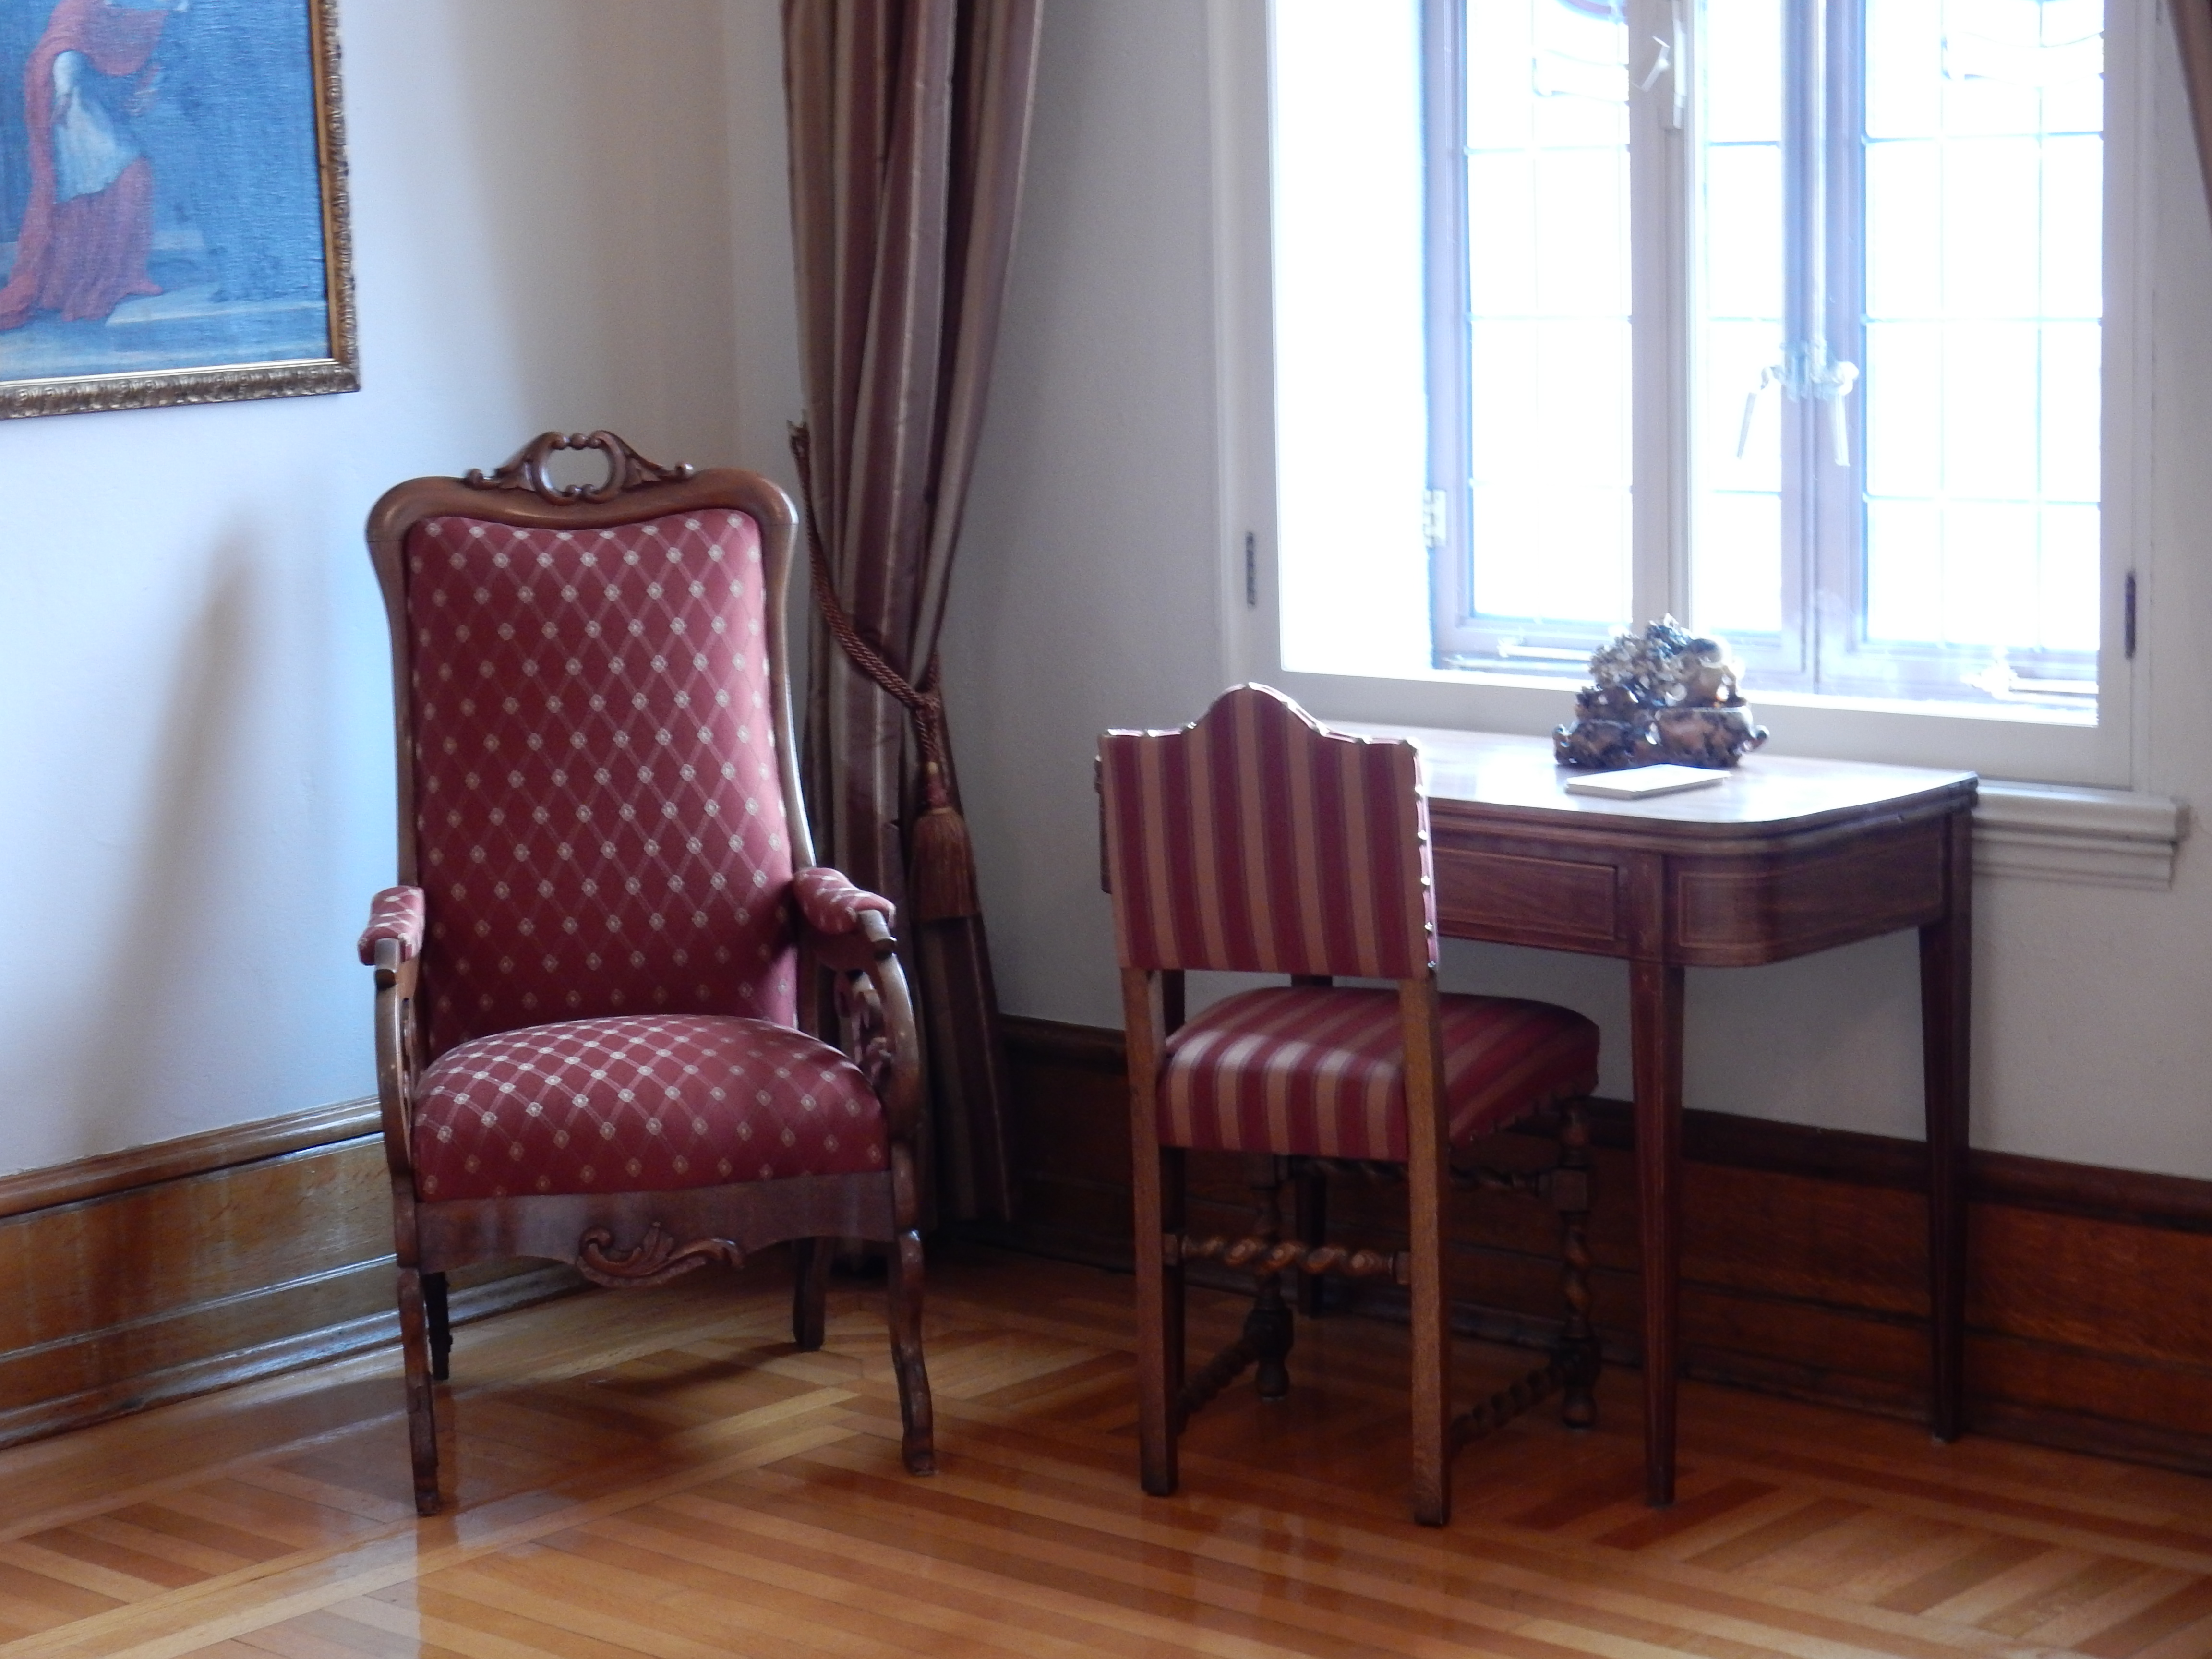 Furniture Main parlor Archbishop palace